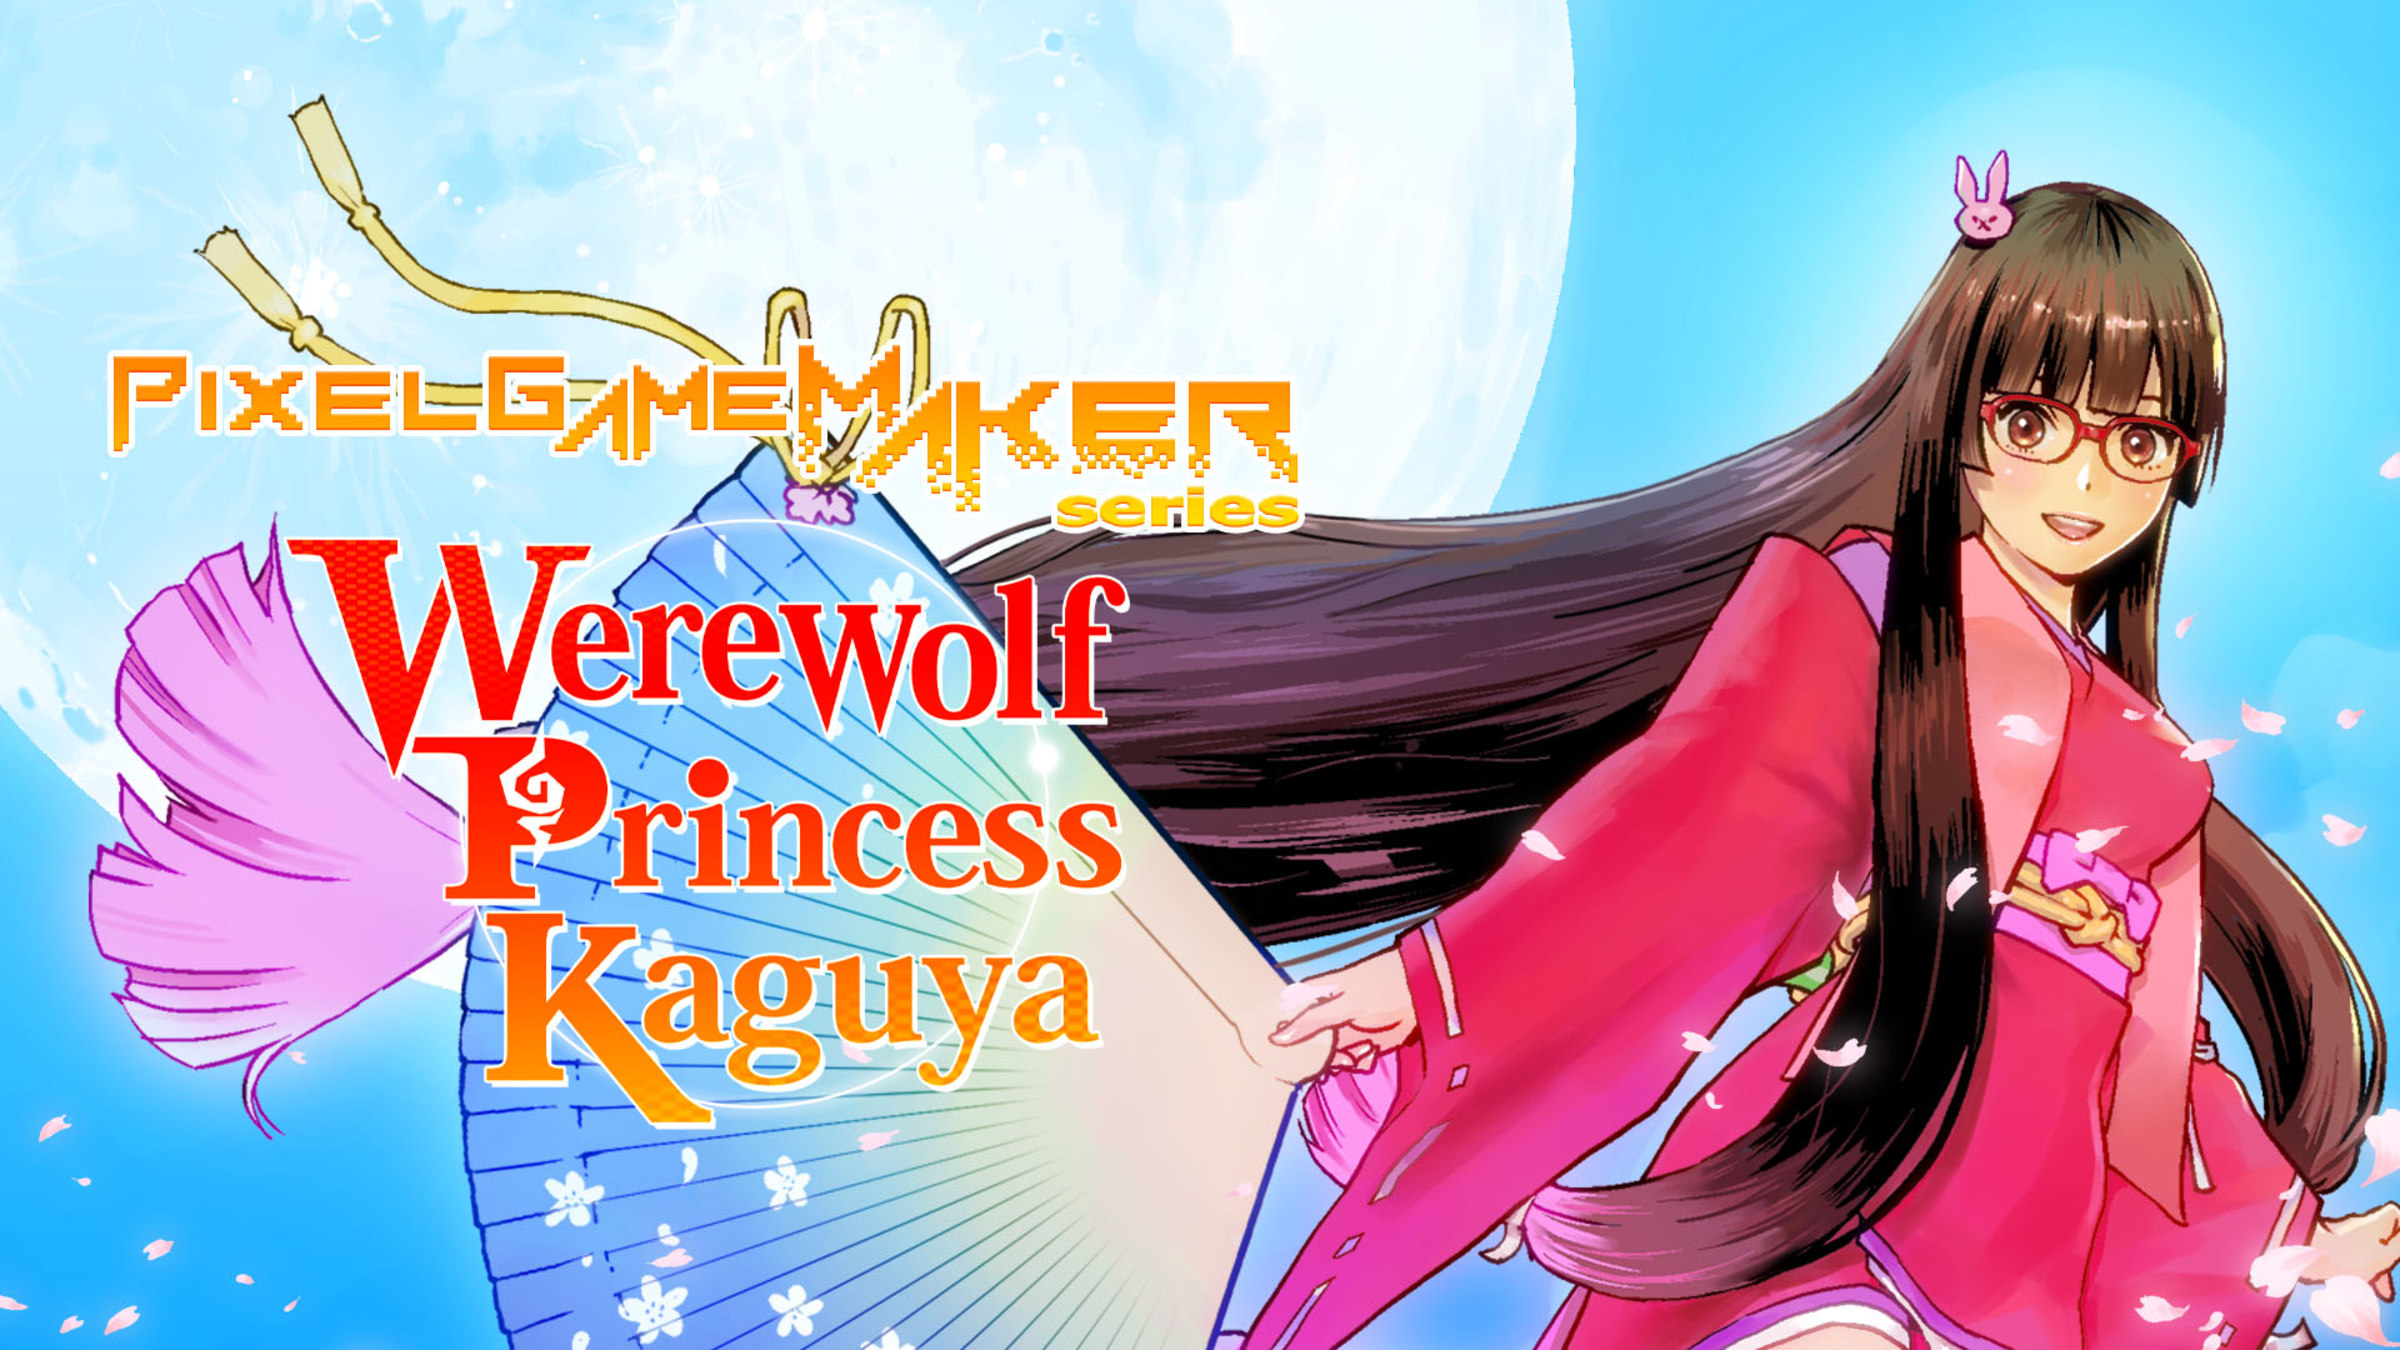 Pixel Game Maker Series Werewolf Princess Kaguya for Nintendo Switch -  Nintendo Official Site